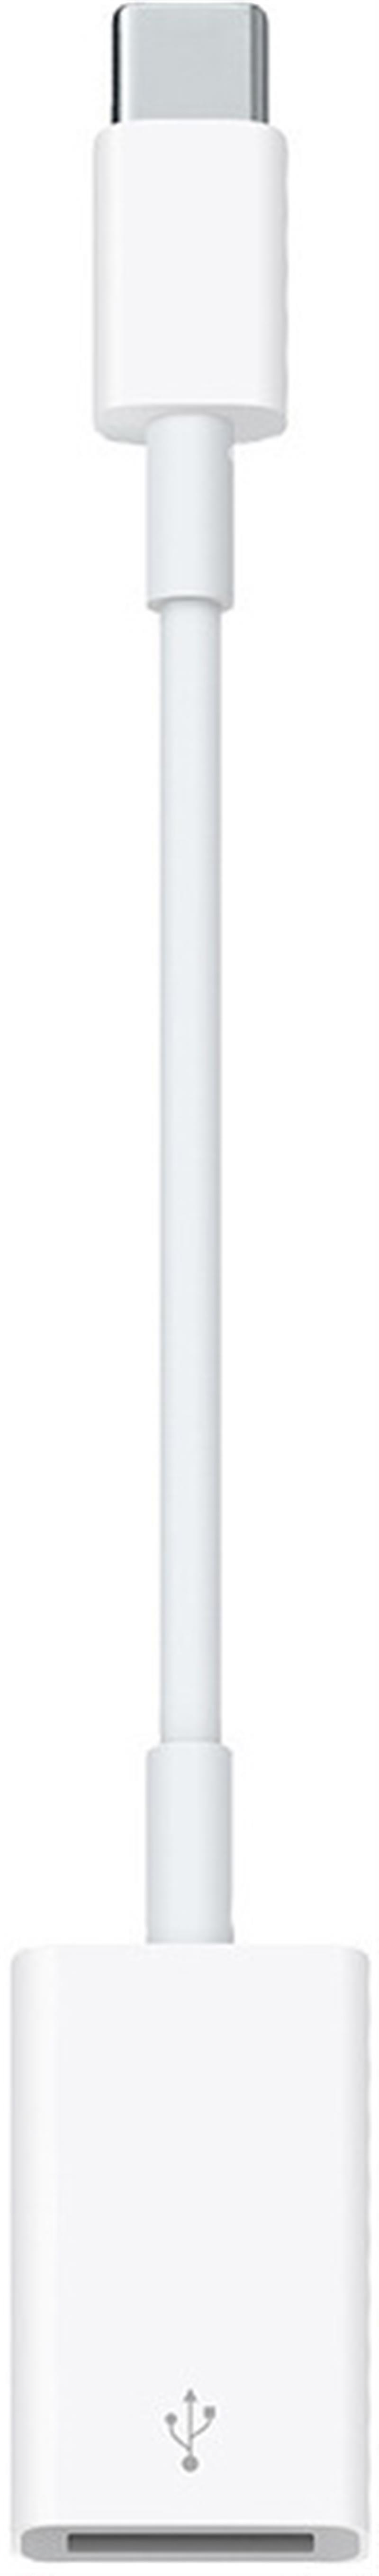 Apple USB-C to USB Adapter White 